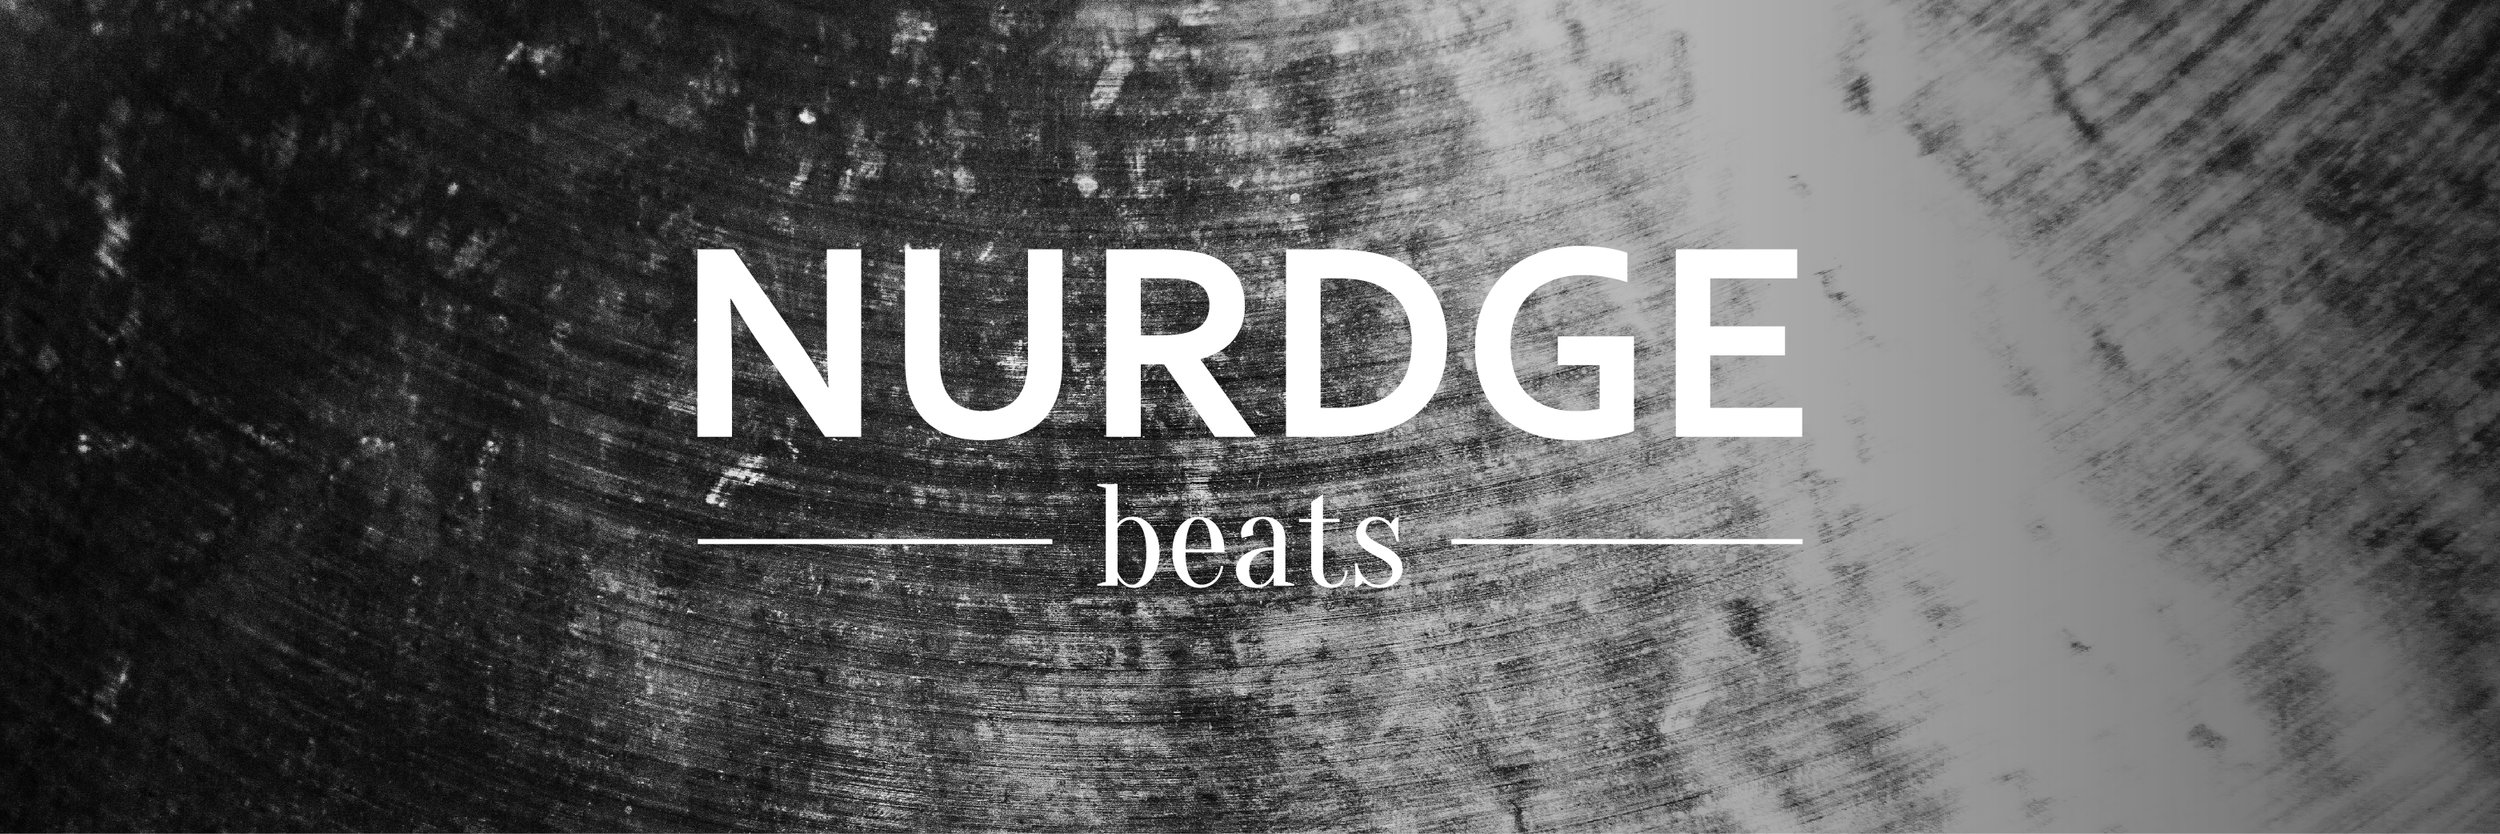 Nurdge Beats Twitter Banner